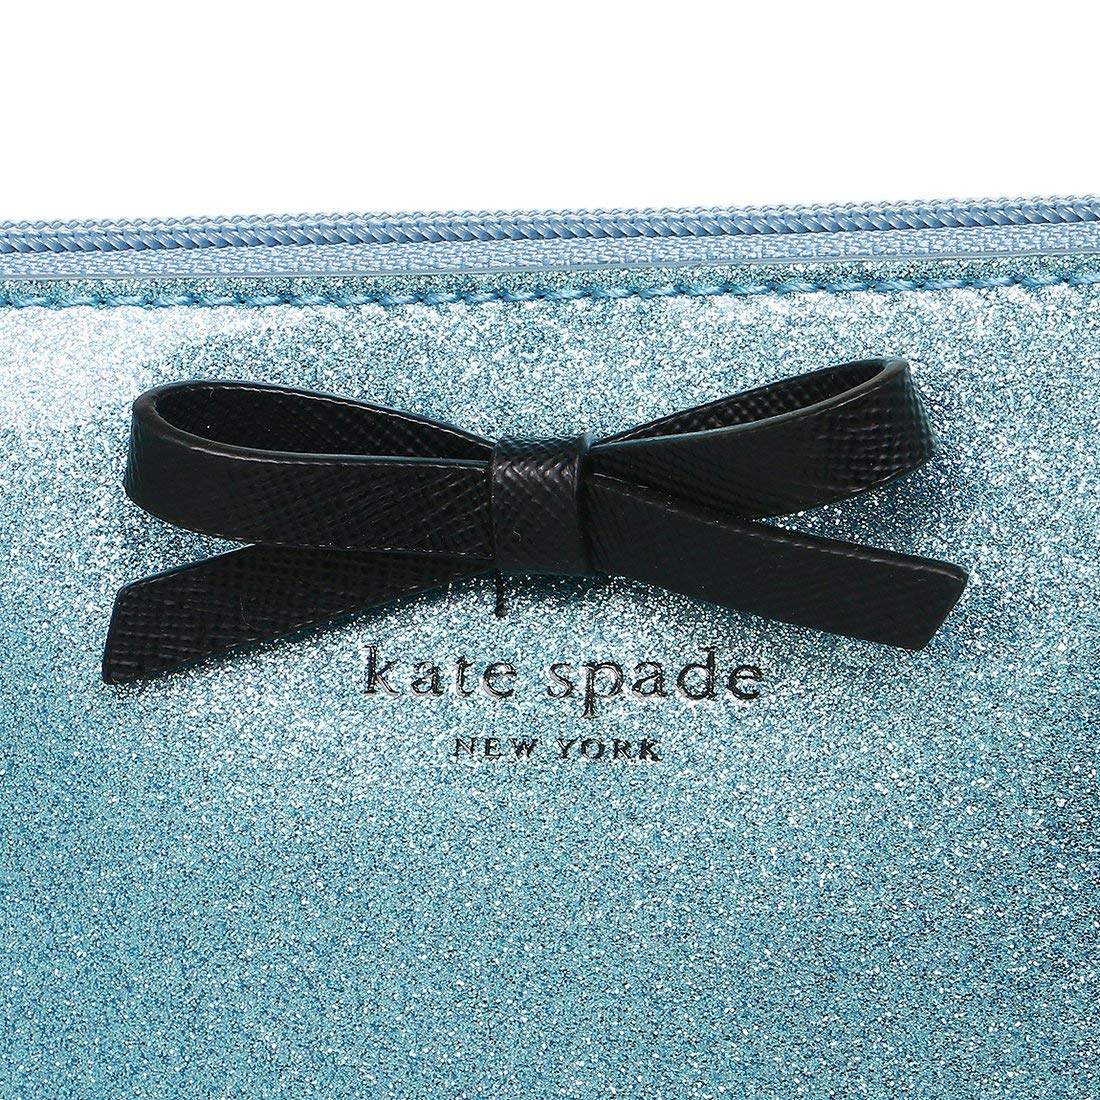 Kate Spade Mavis Street Jeralyn Tote Shoulder Bag Lakesedge Blue Glitter # WKRU3579